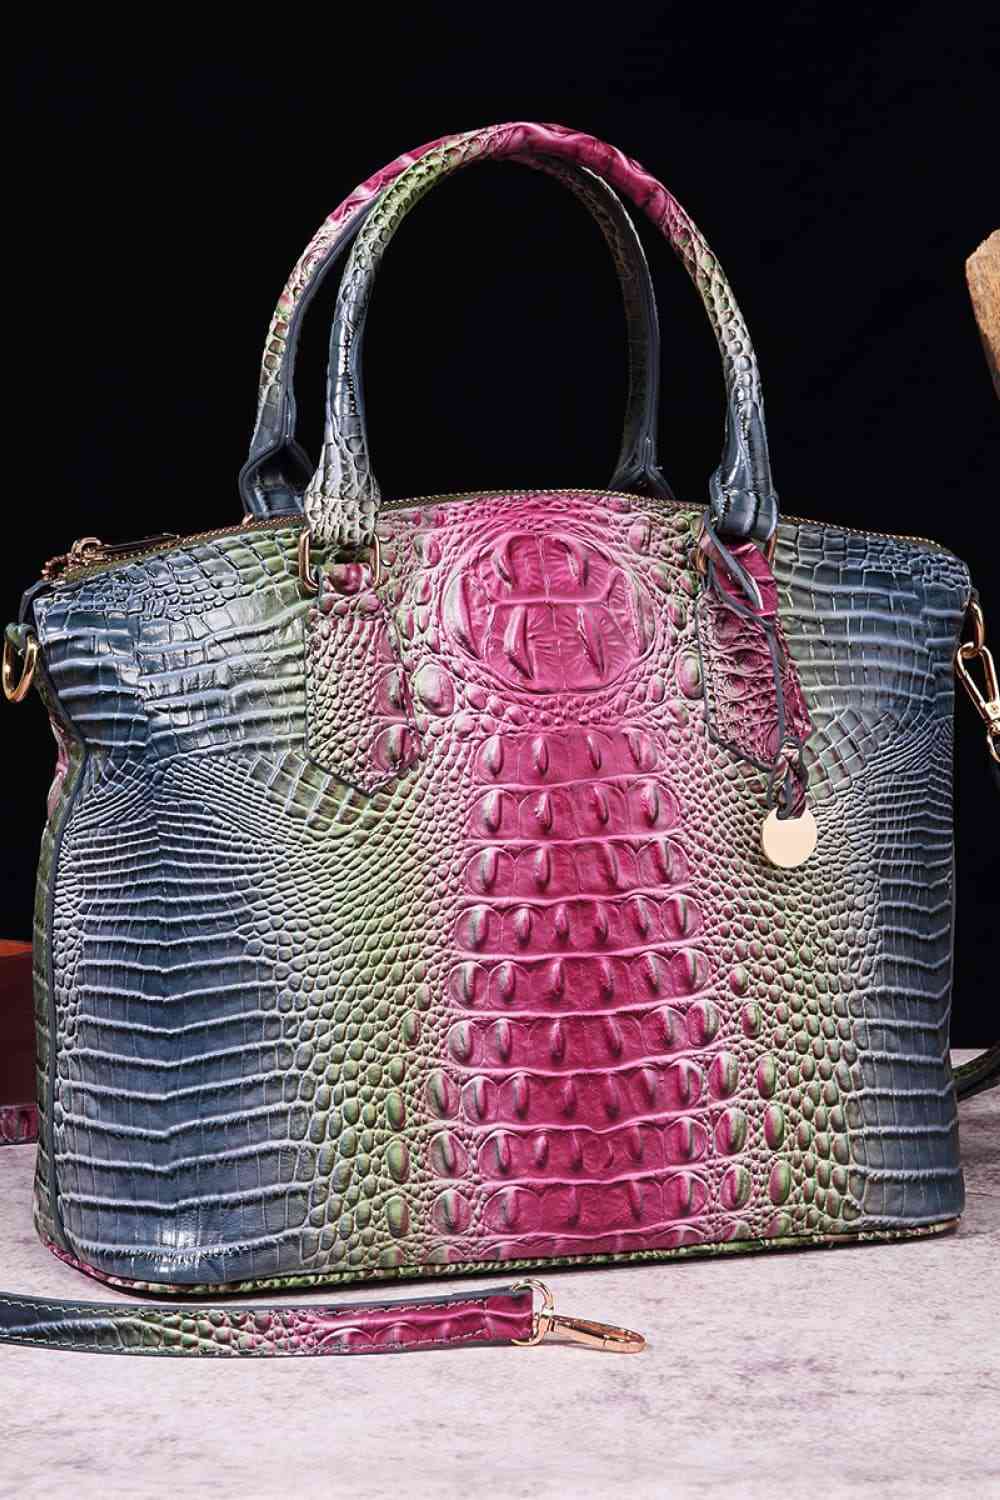 Gradient PU Leather Handbag 12 Colors!